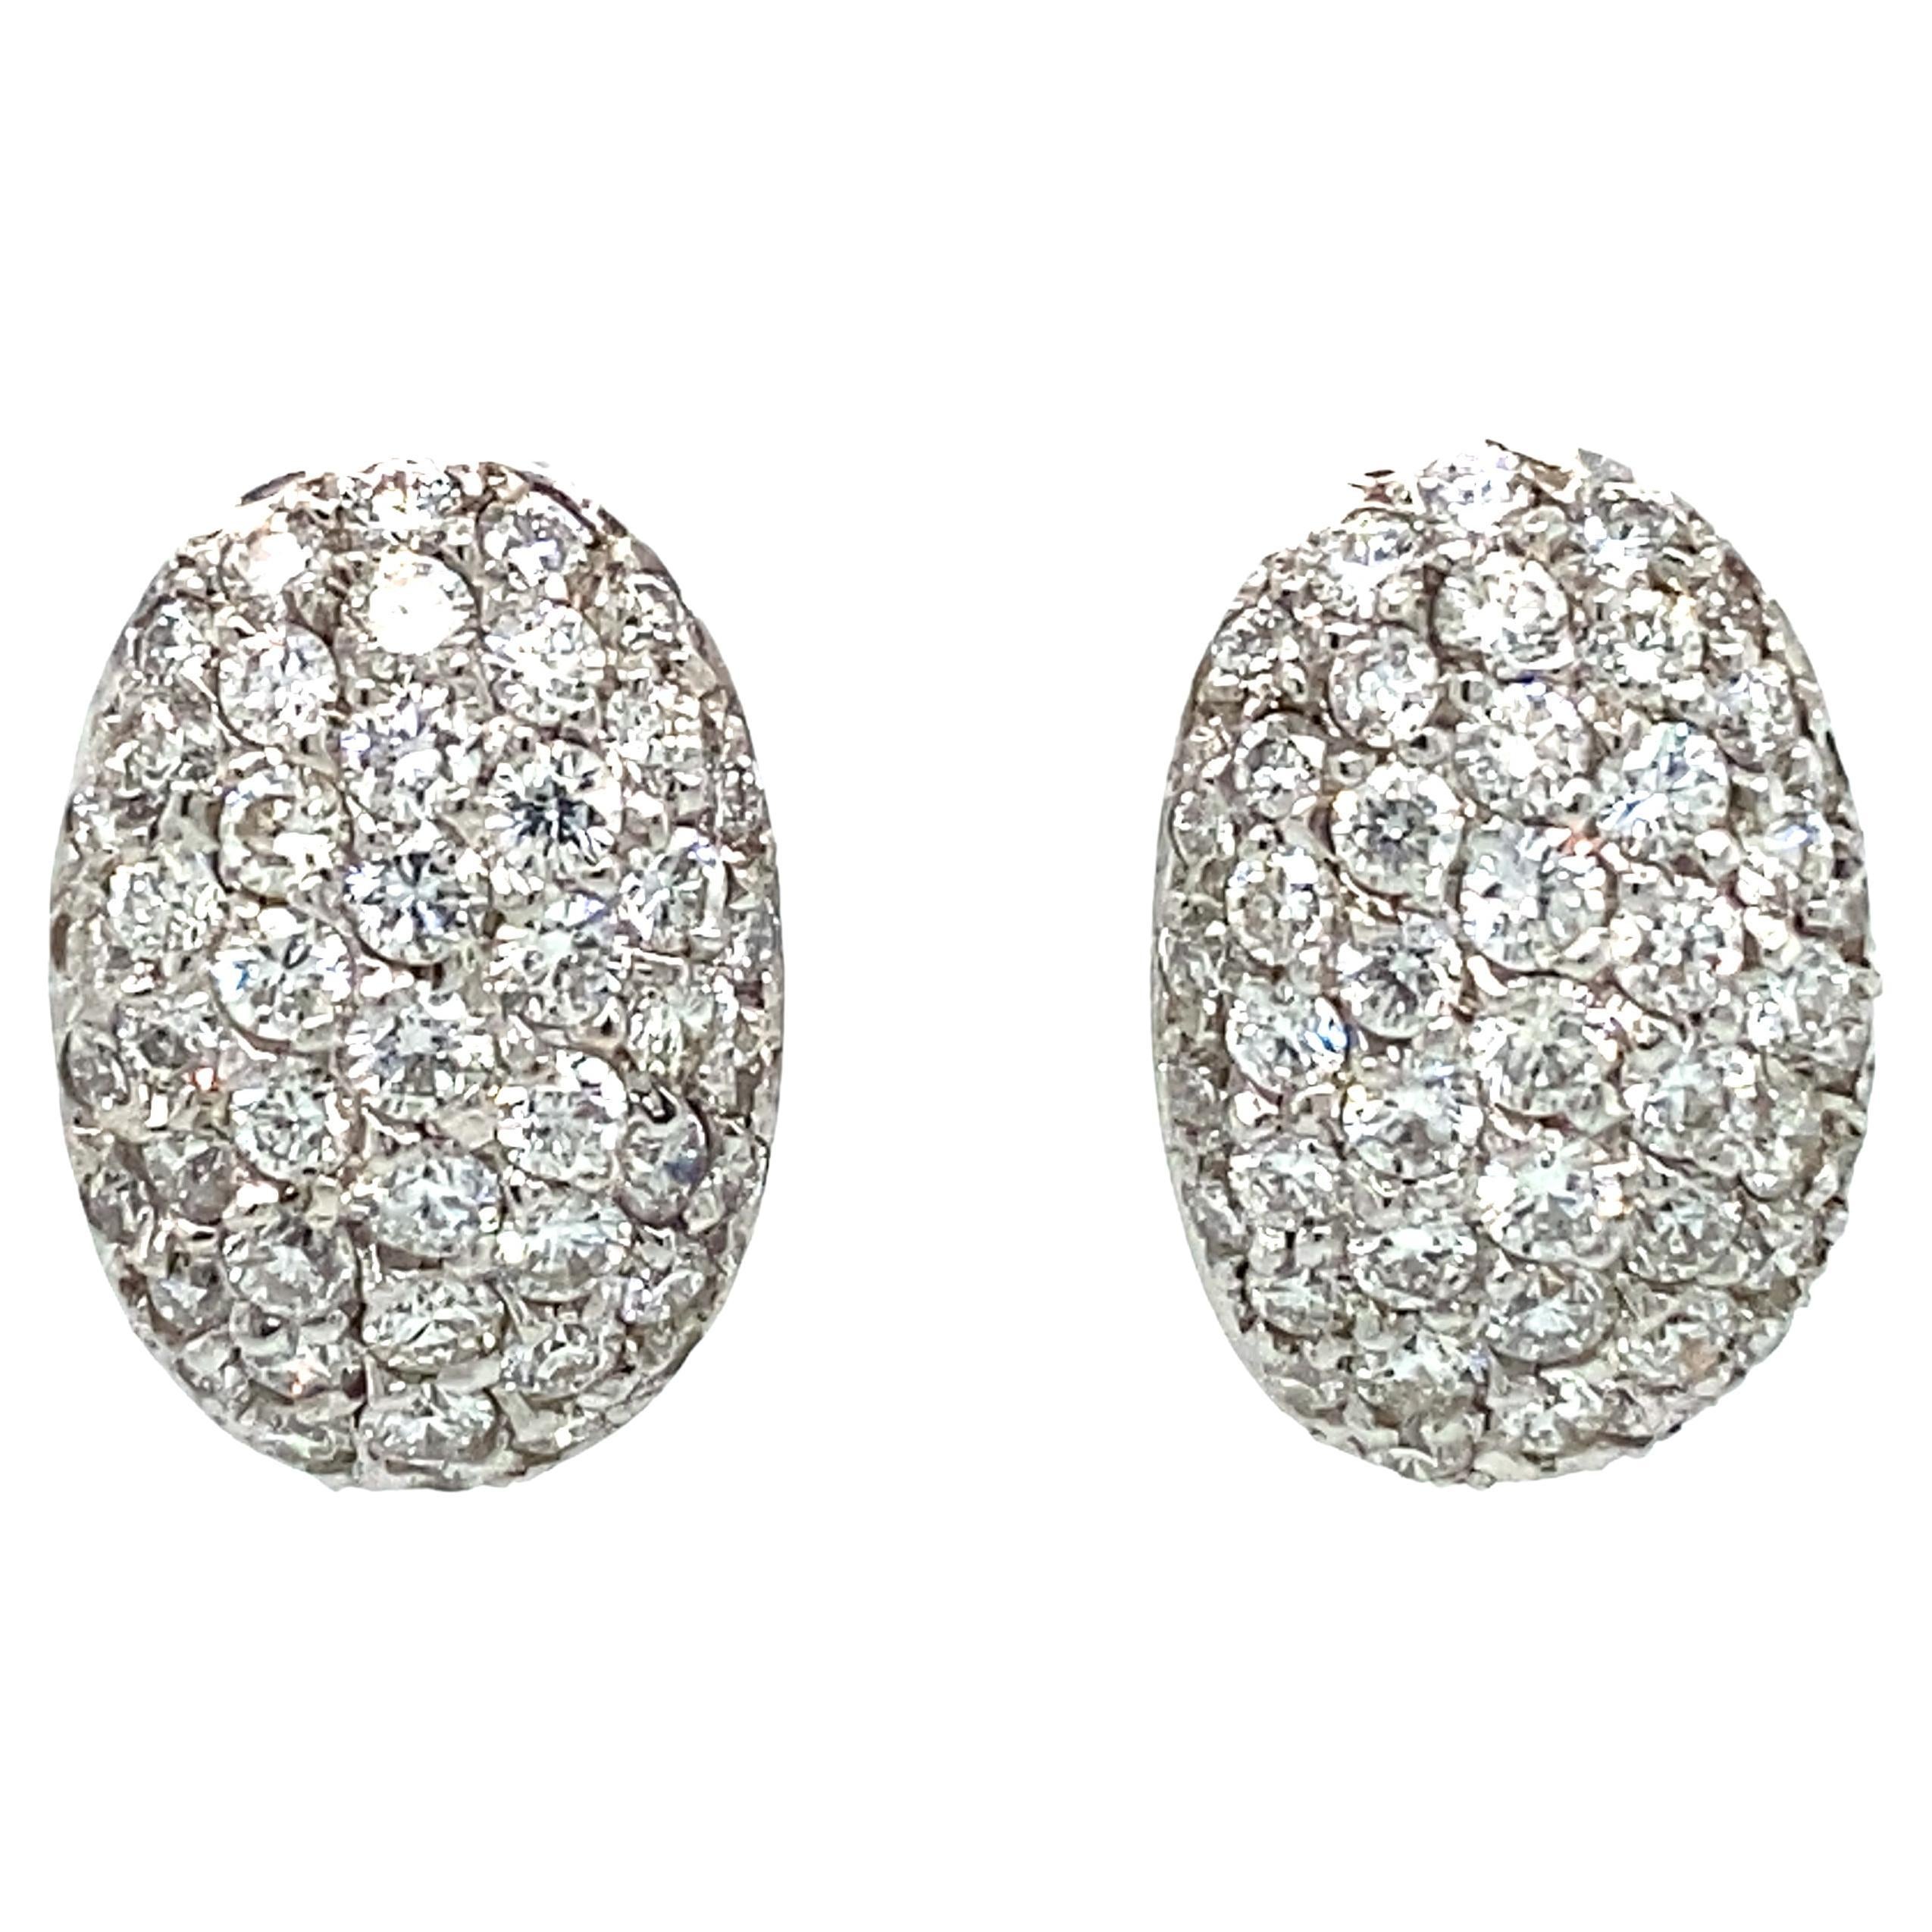 Tiffany & Co. 4 Carat Total Pave Diamond Earrings in 18 Karat White Gold